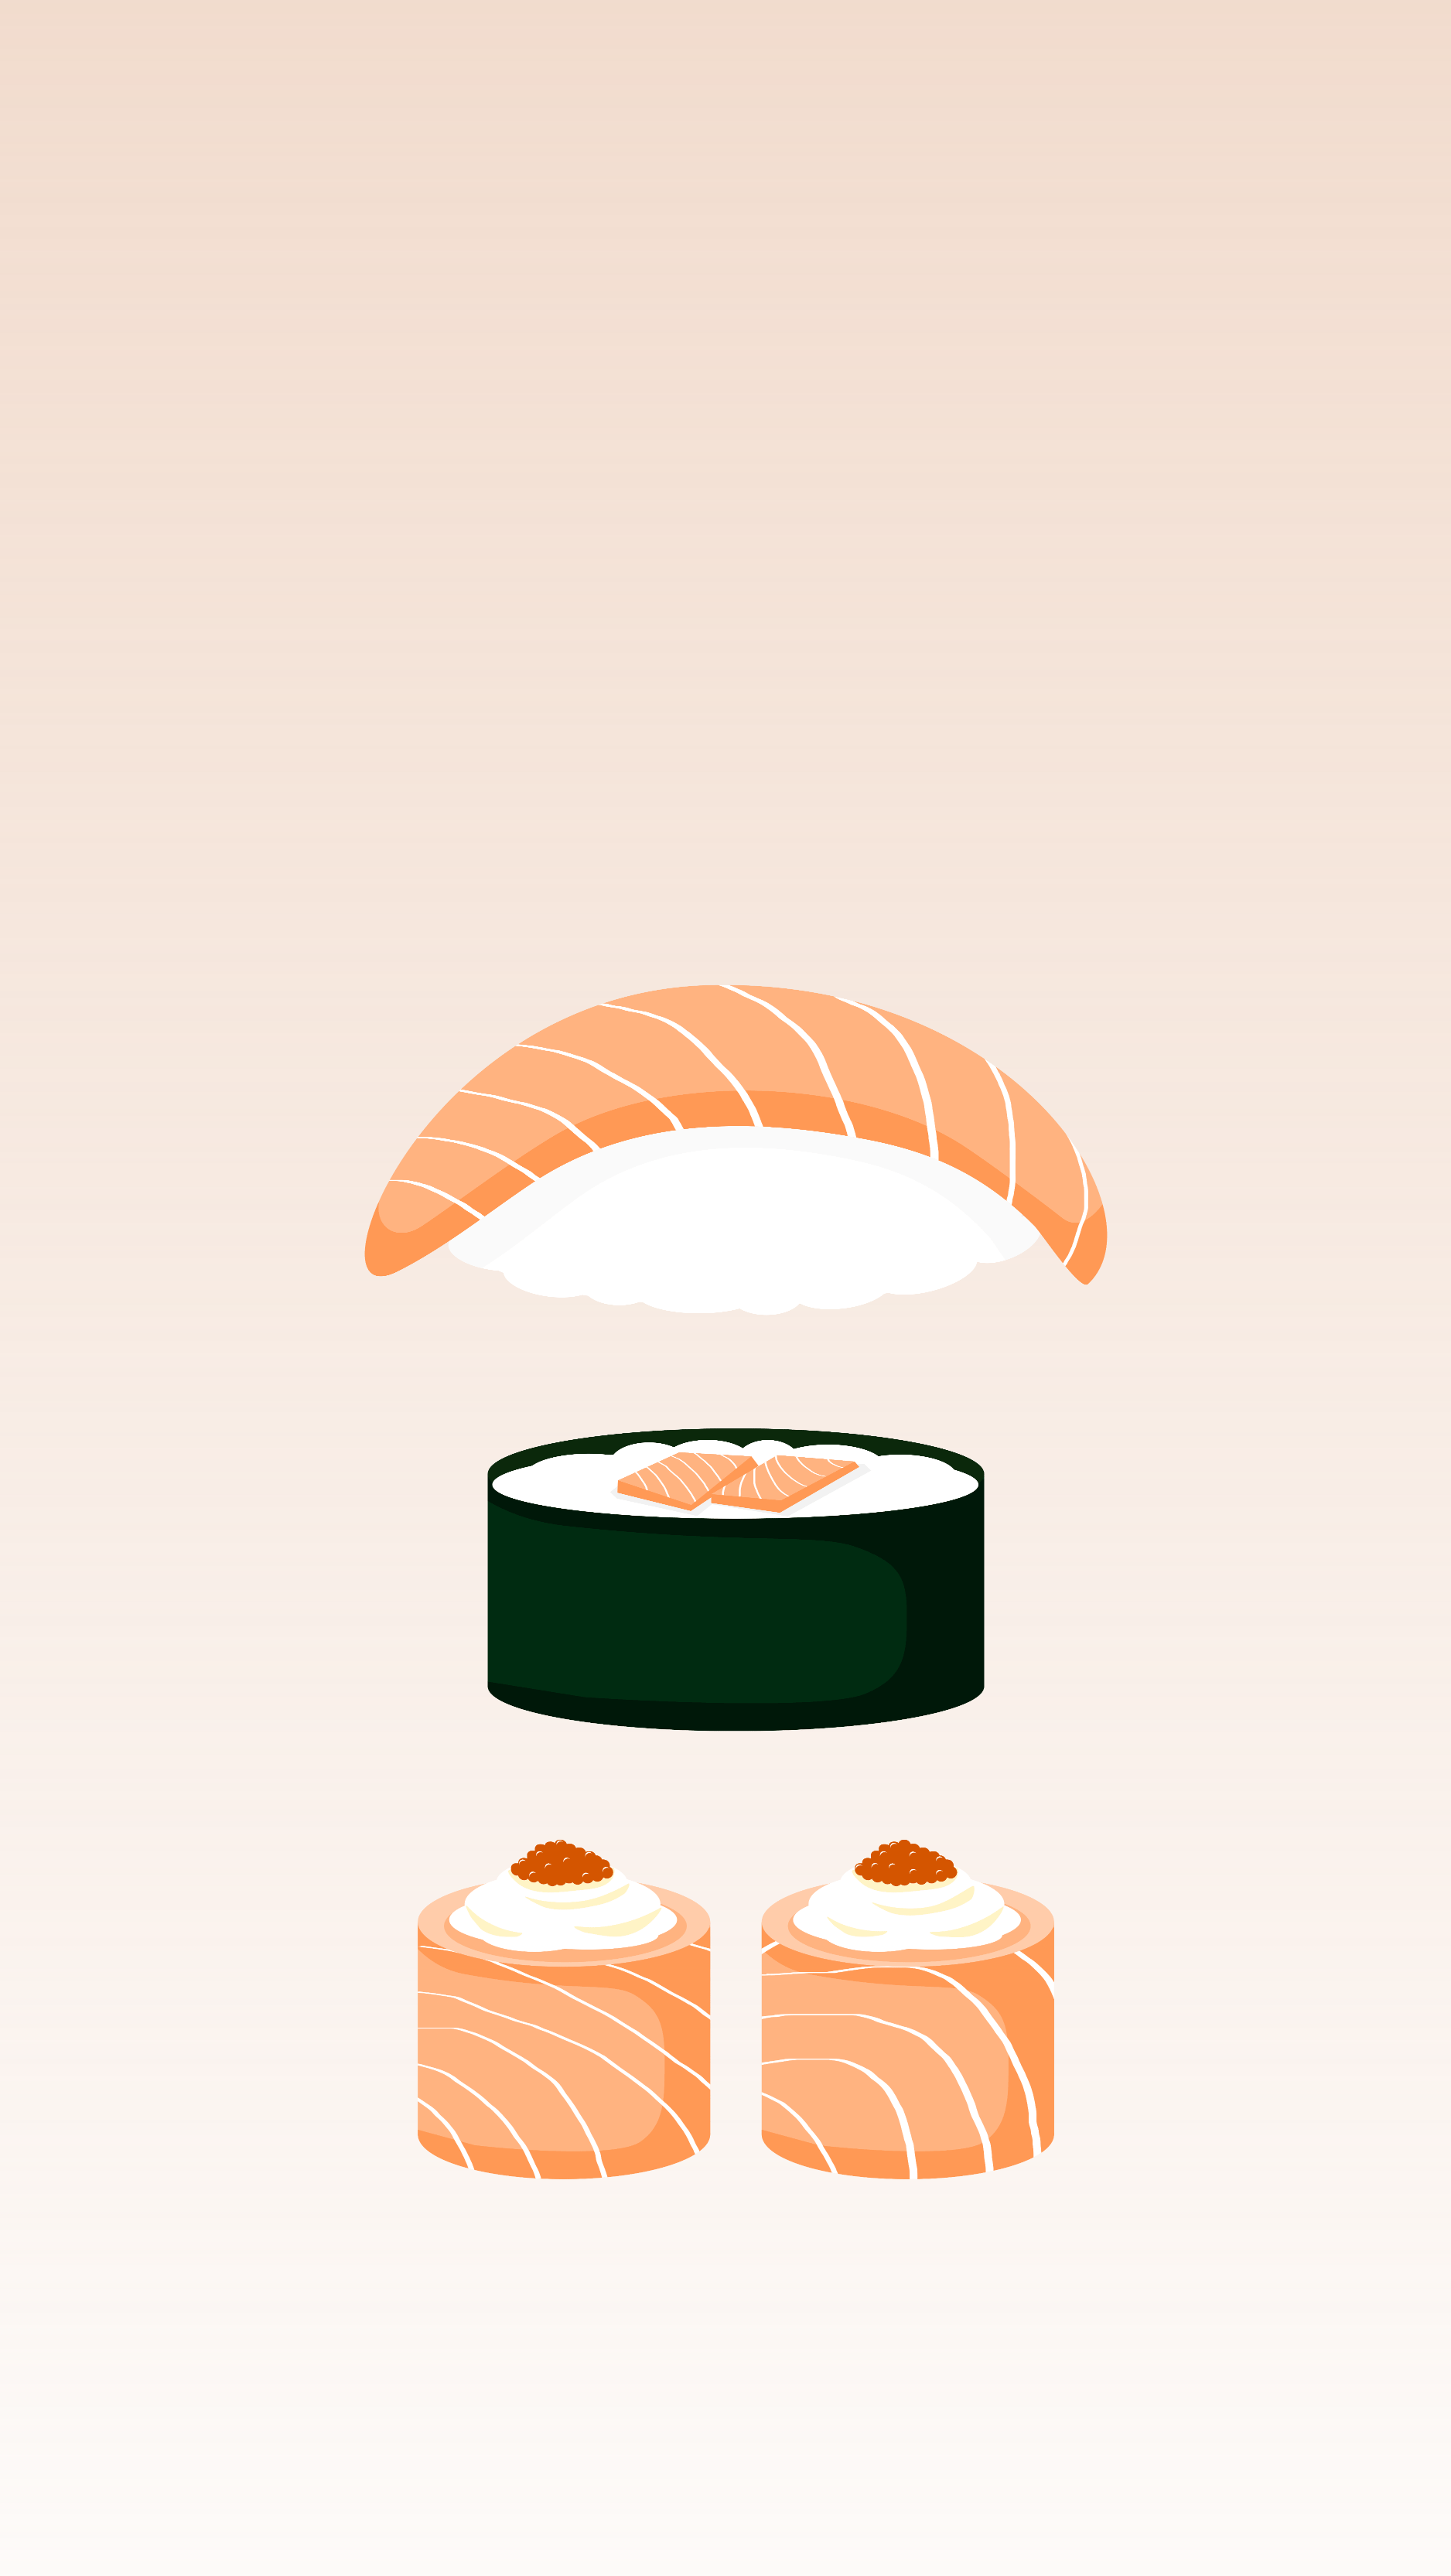 Salmon sushi wallpaper. Aesthetic iphone wallpaper, Food illustration art, Sushi cartoon